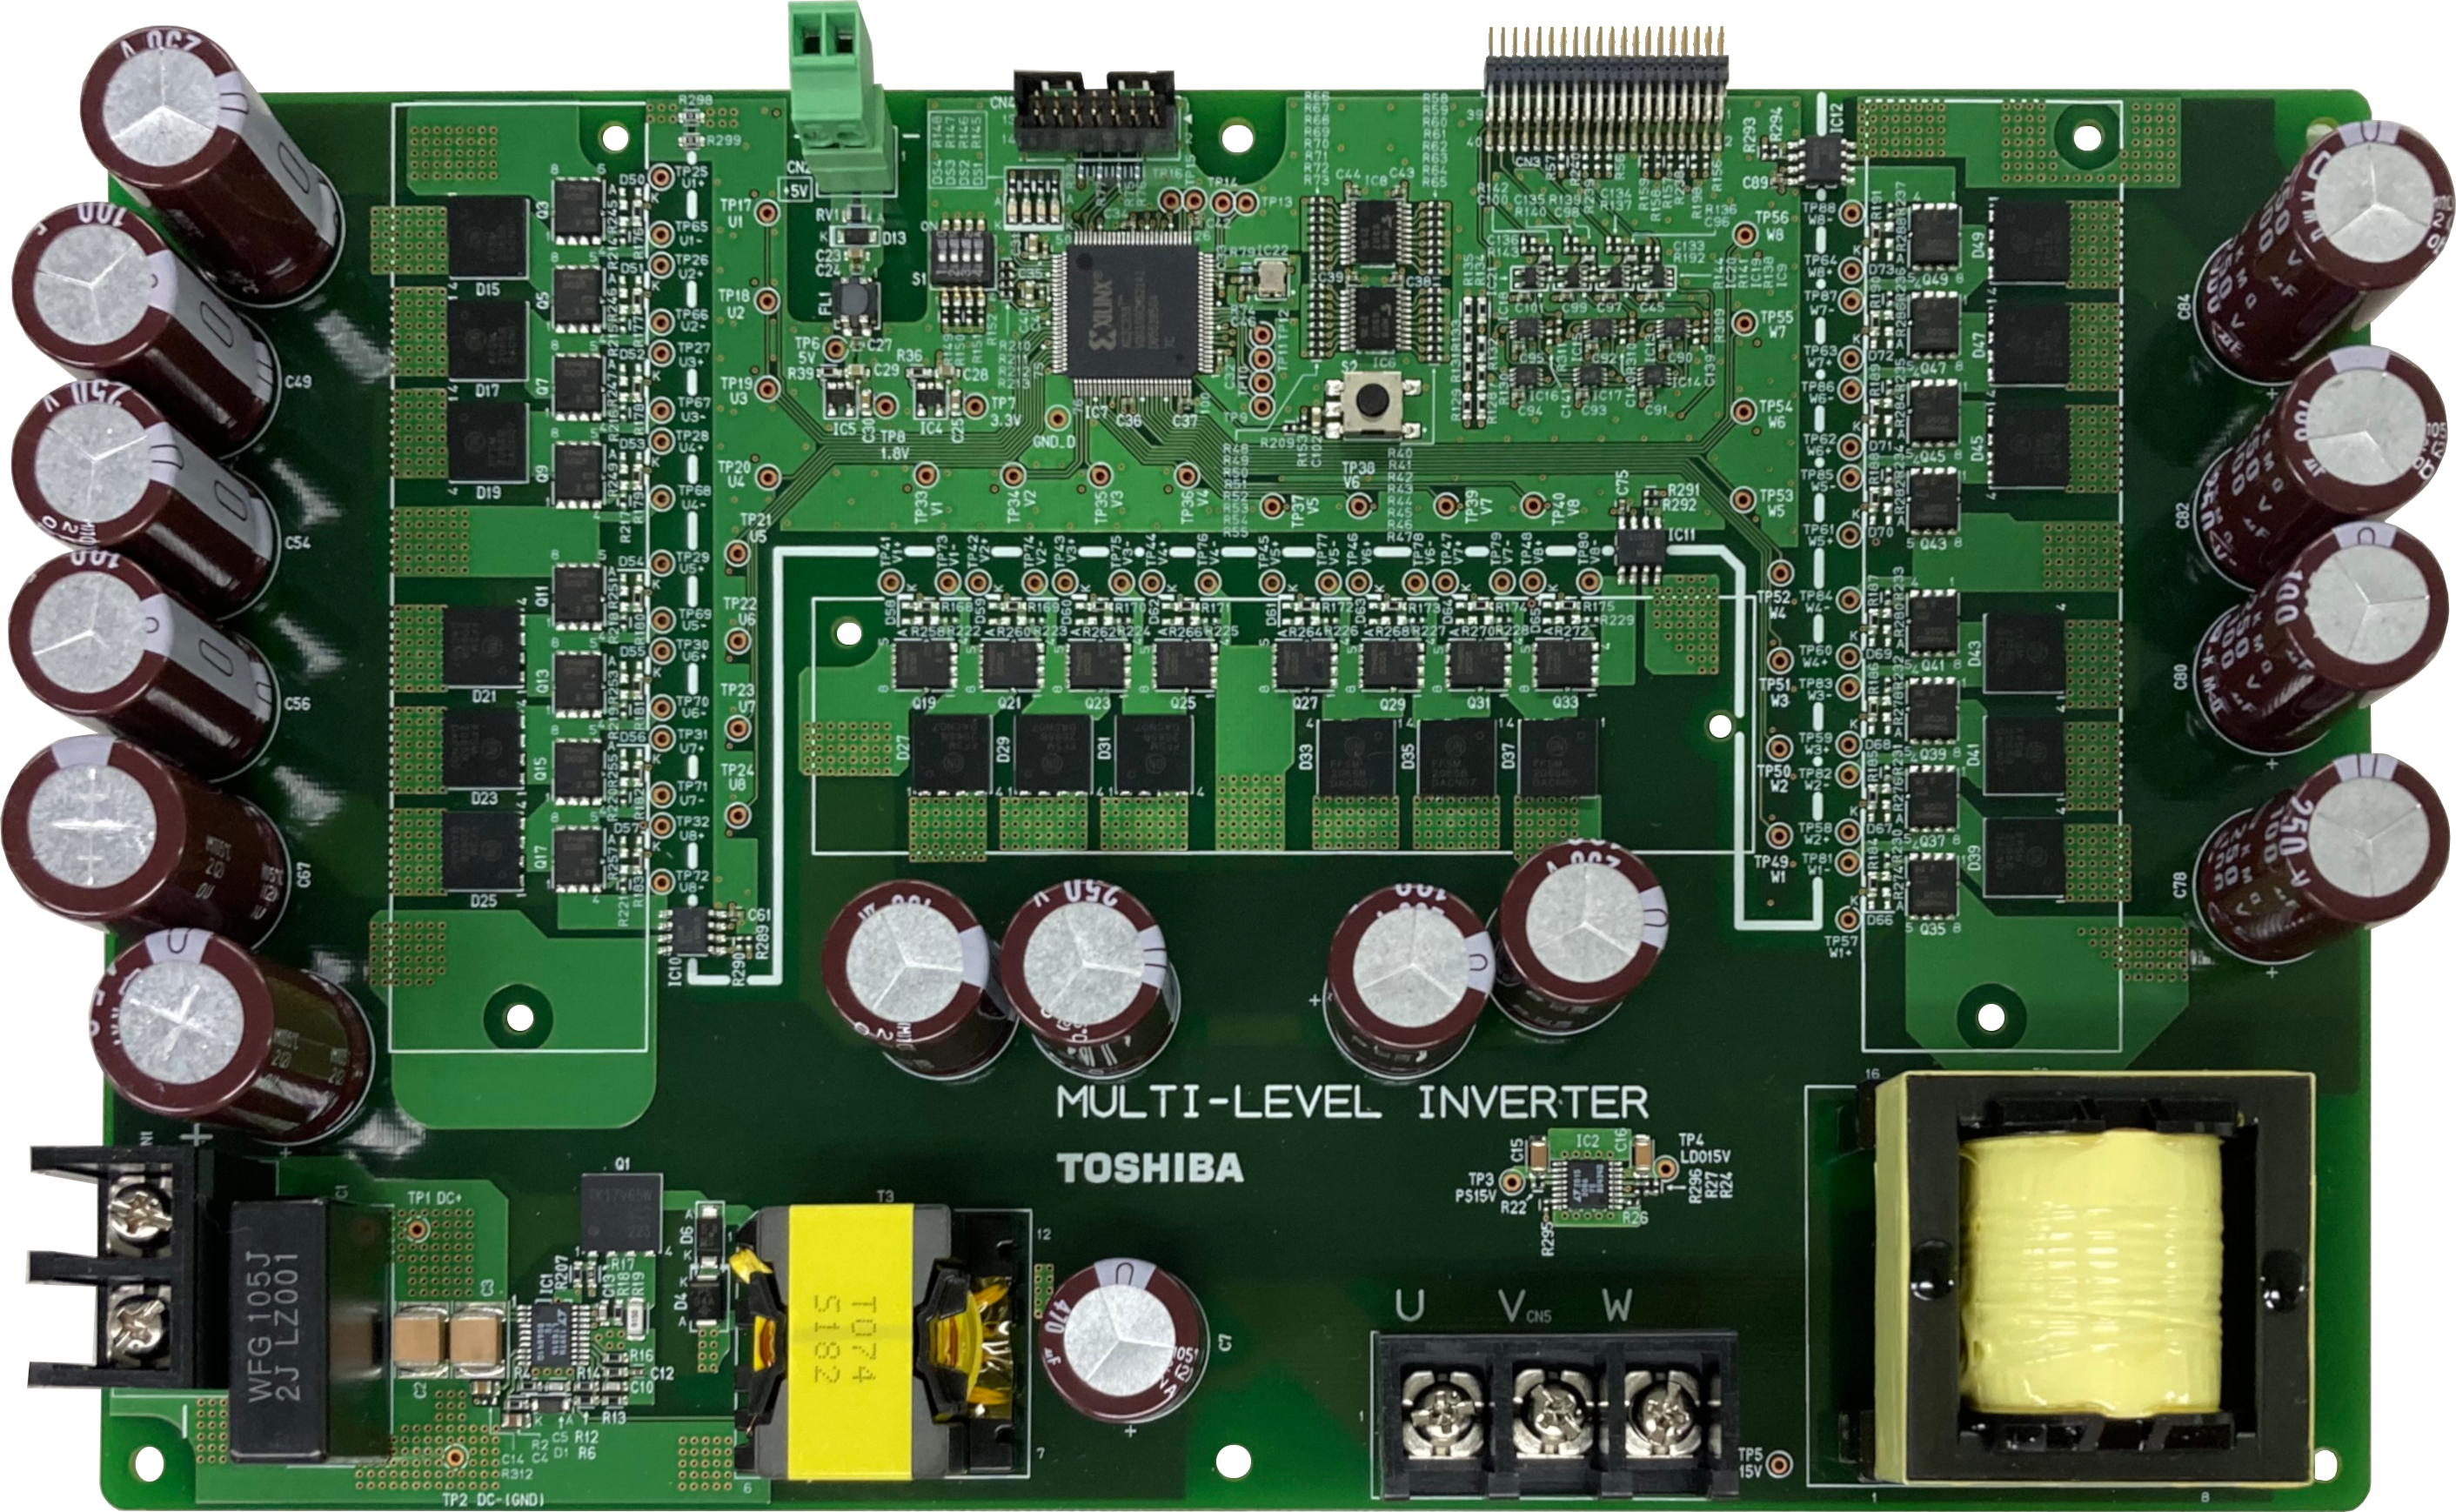 3-Phase Multi-Level Inverter using MOSFET